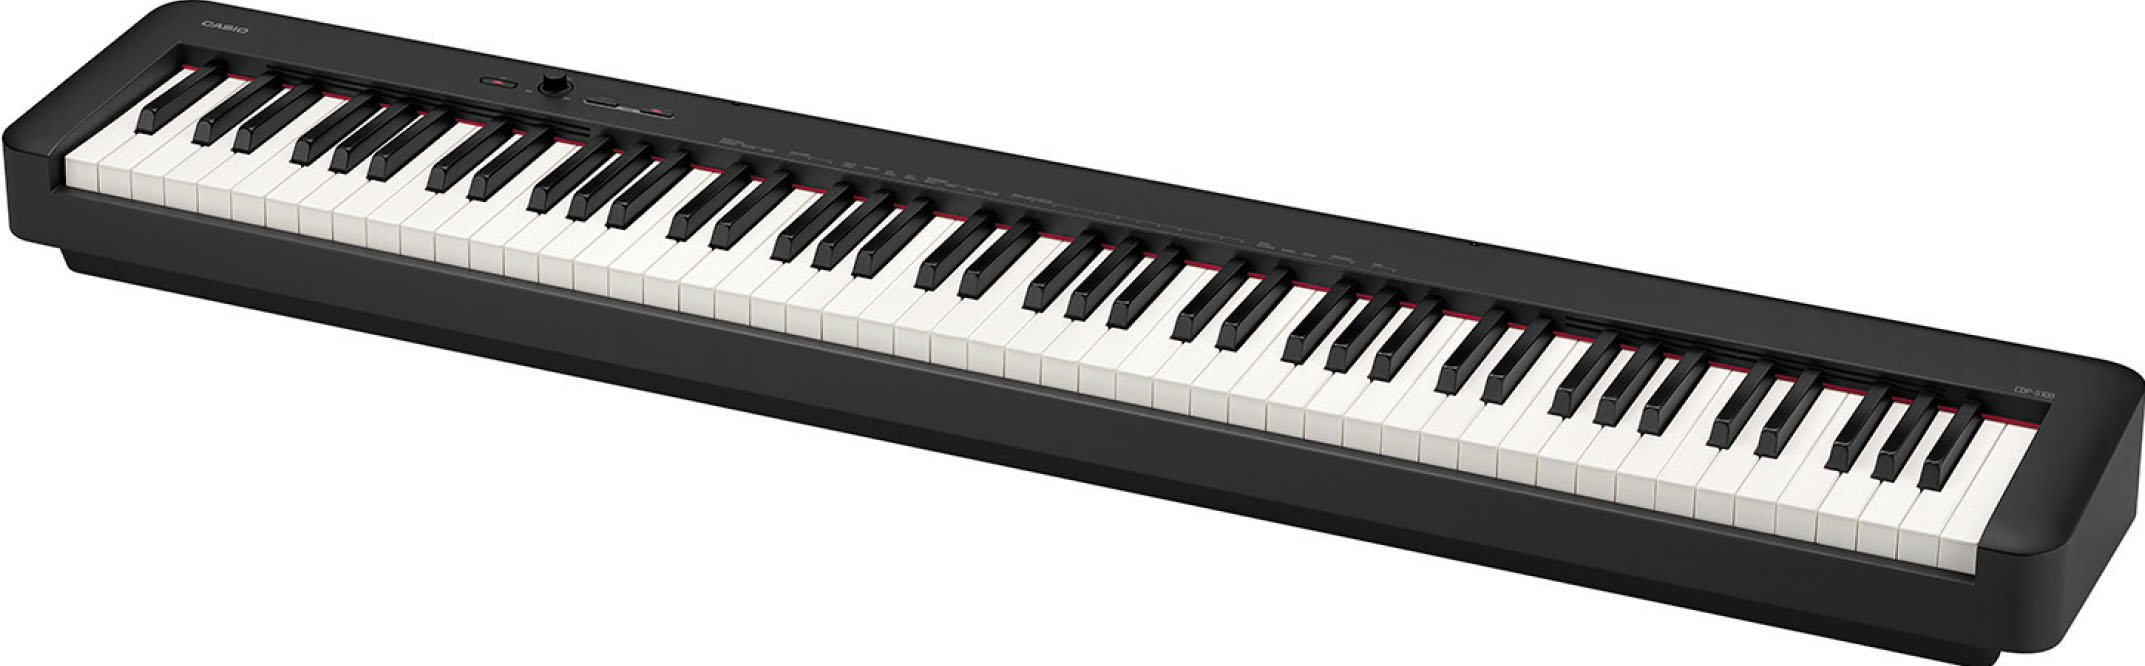 Tech Reviews: Casio CDP-S100 Digital Piano | Music Teacher